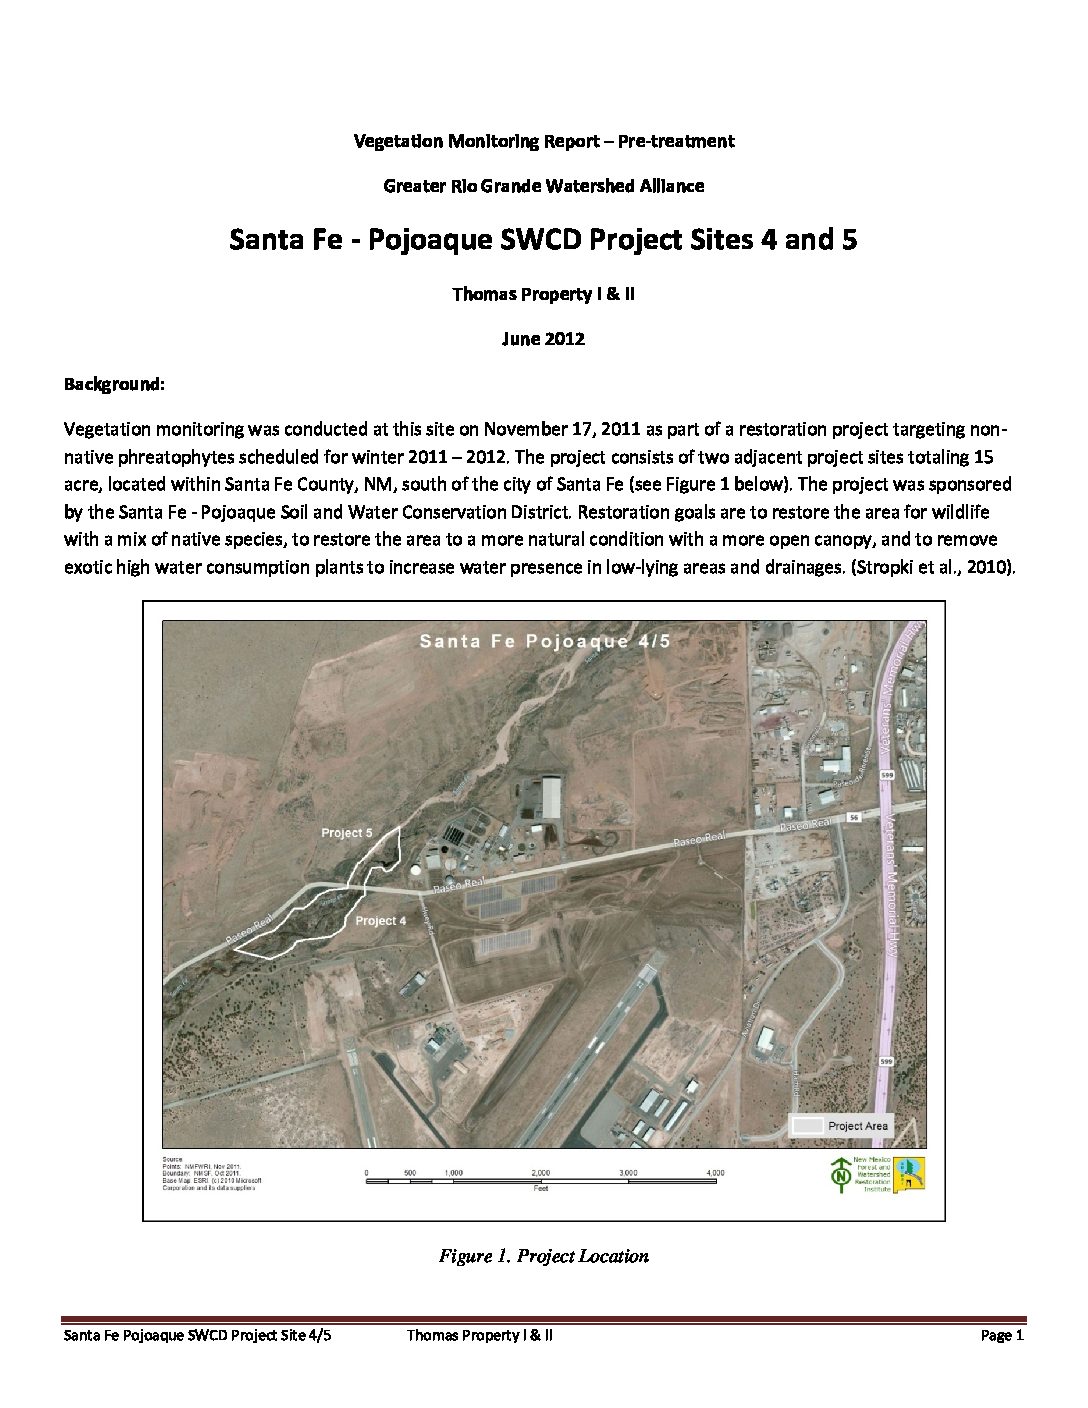 Thomas Property, Santa Fe - Pojoaque SWCD, Property Sites 4 and 5, Pre-Treatment Monitoring 2012